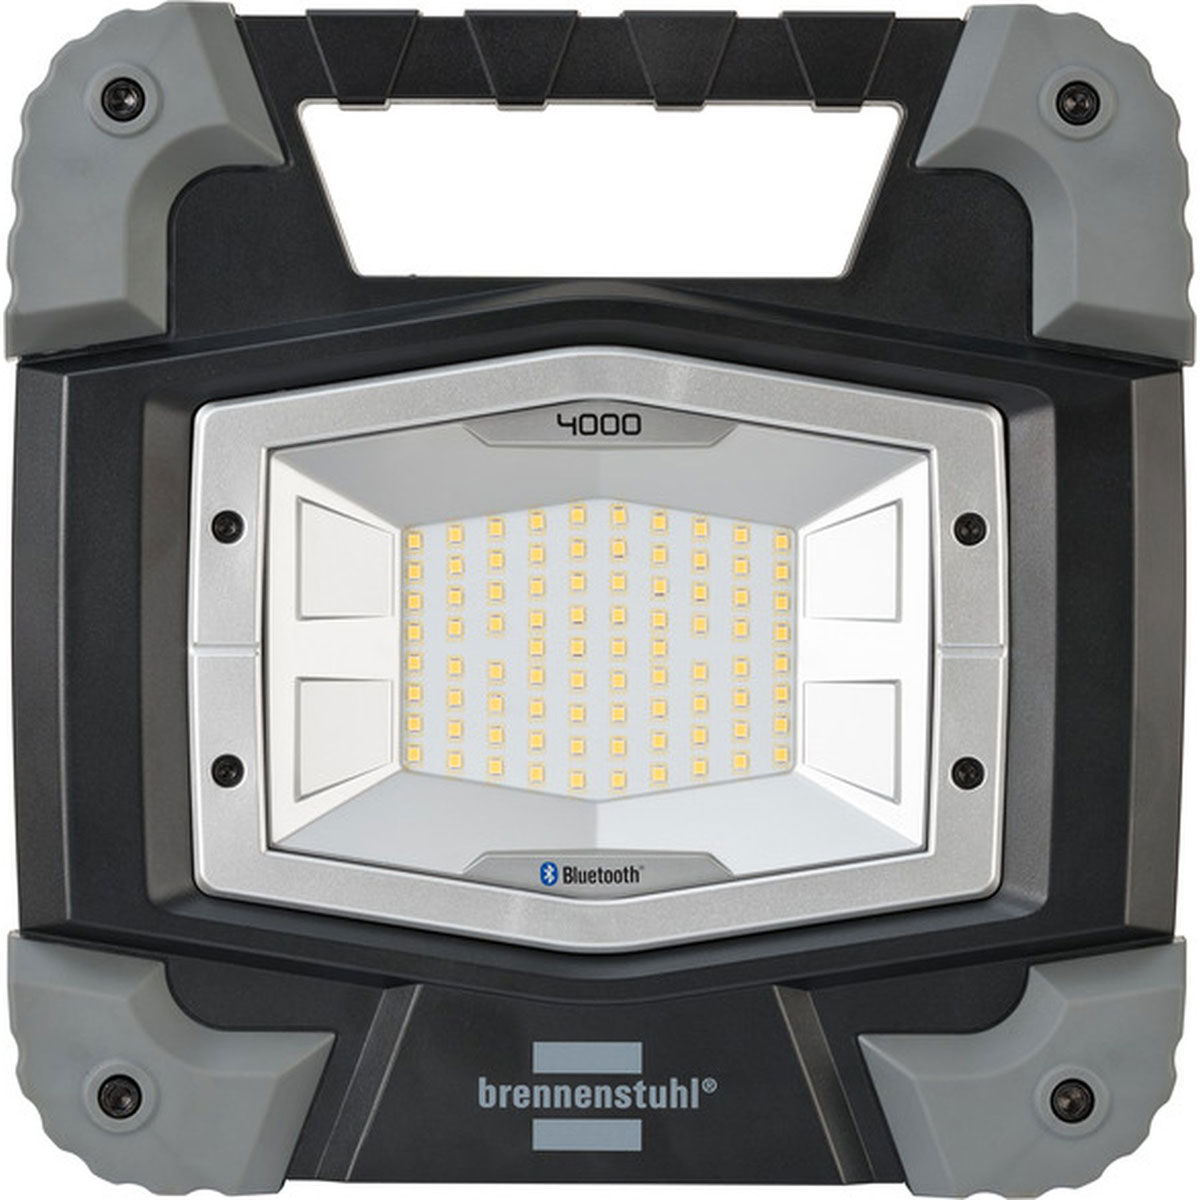 Brennenstuhl LED-Akku-Strahler Toran 4000 MBA mit Bluetooth 40W  grau-schwarz, 40